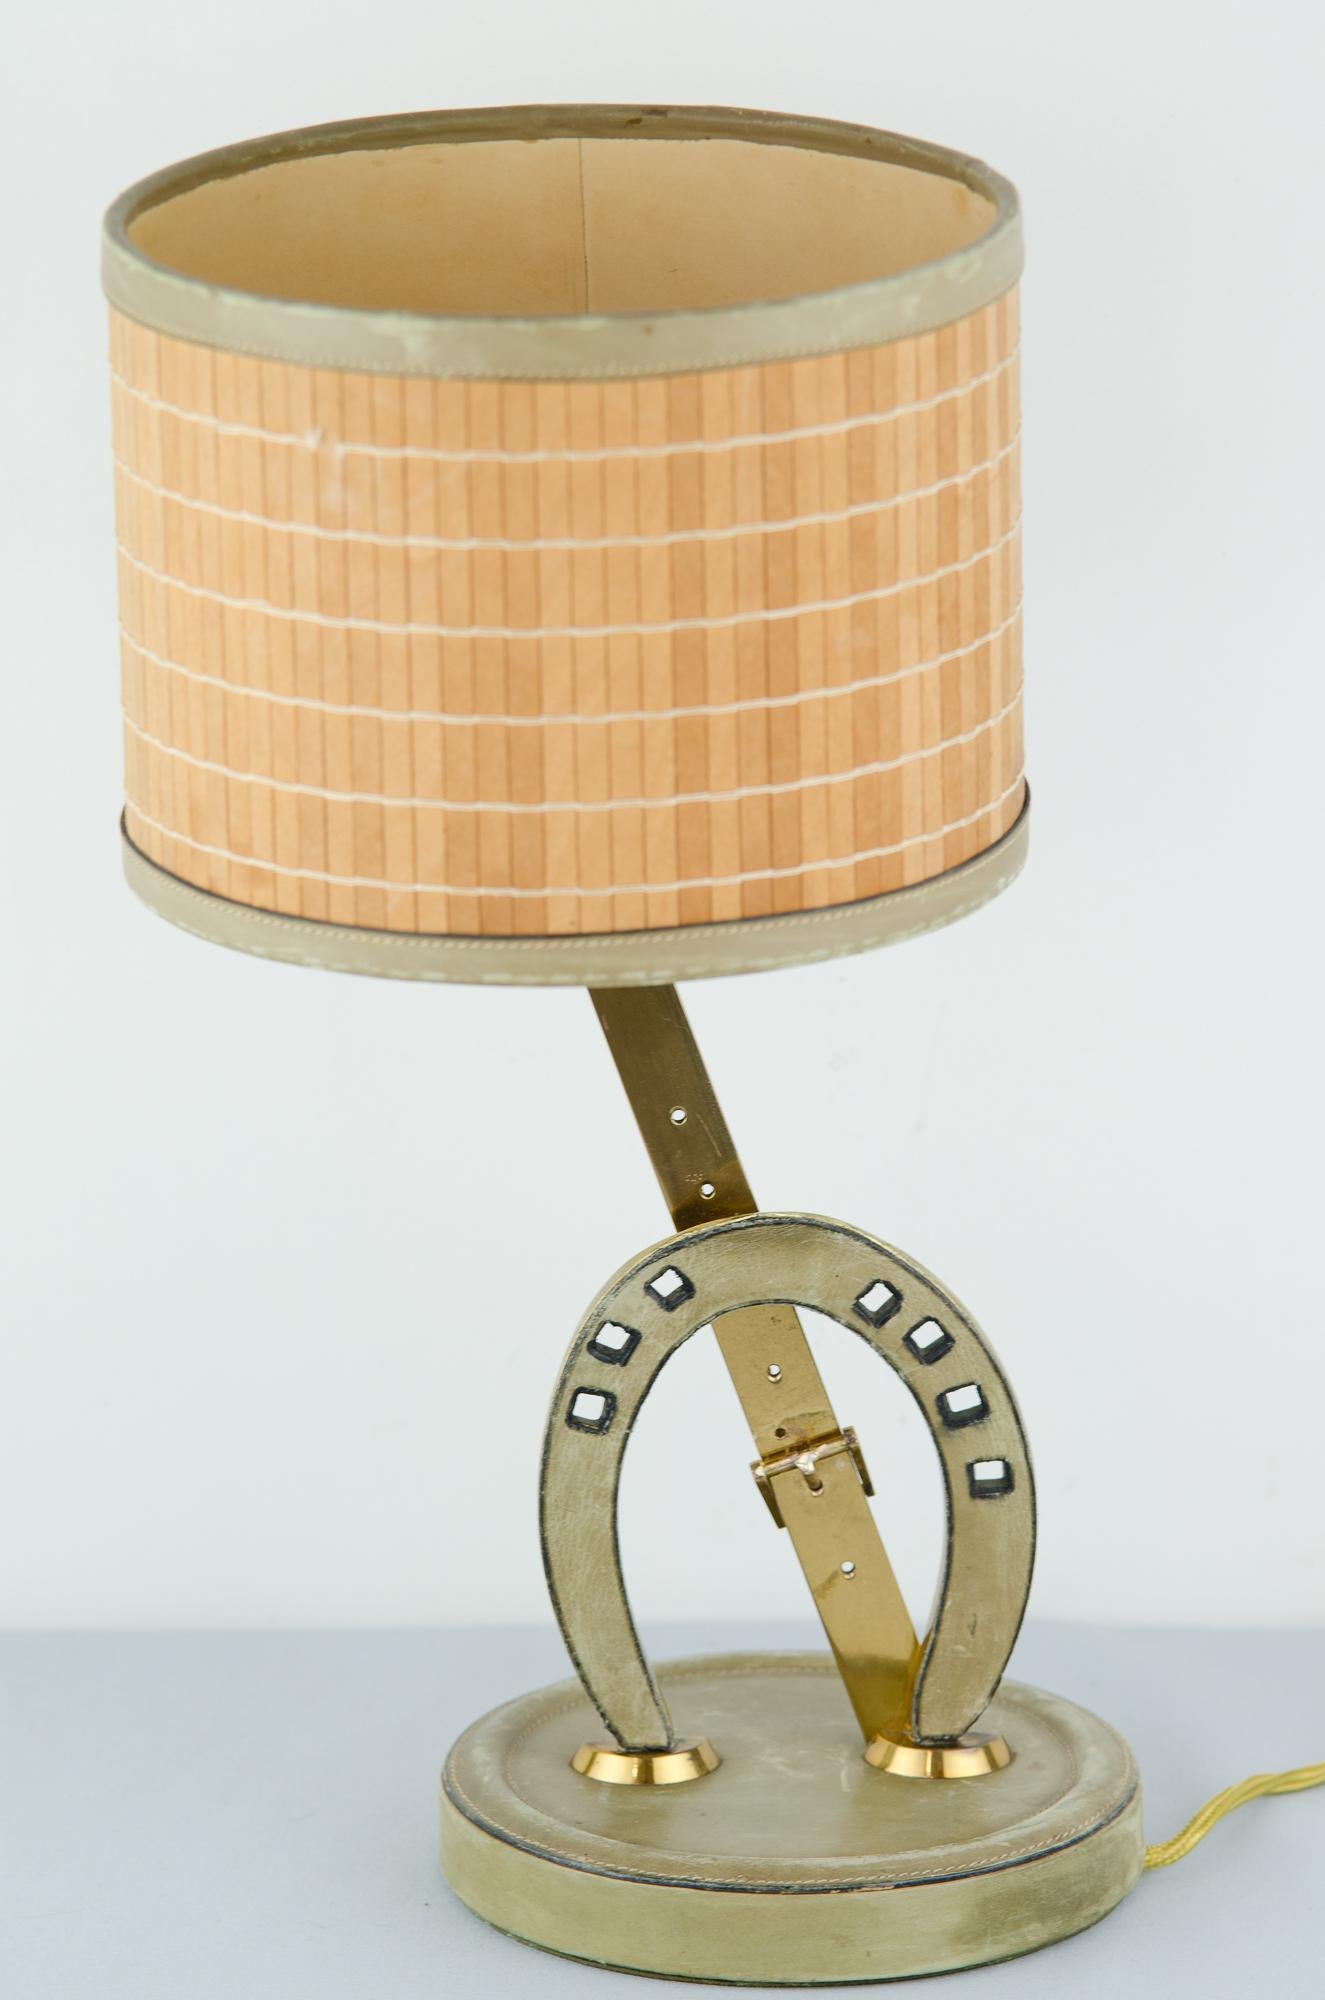 Lampe de table, circa 1960s.
Laiton et cuir
Teinte originale
État original.